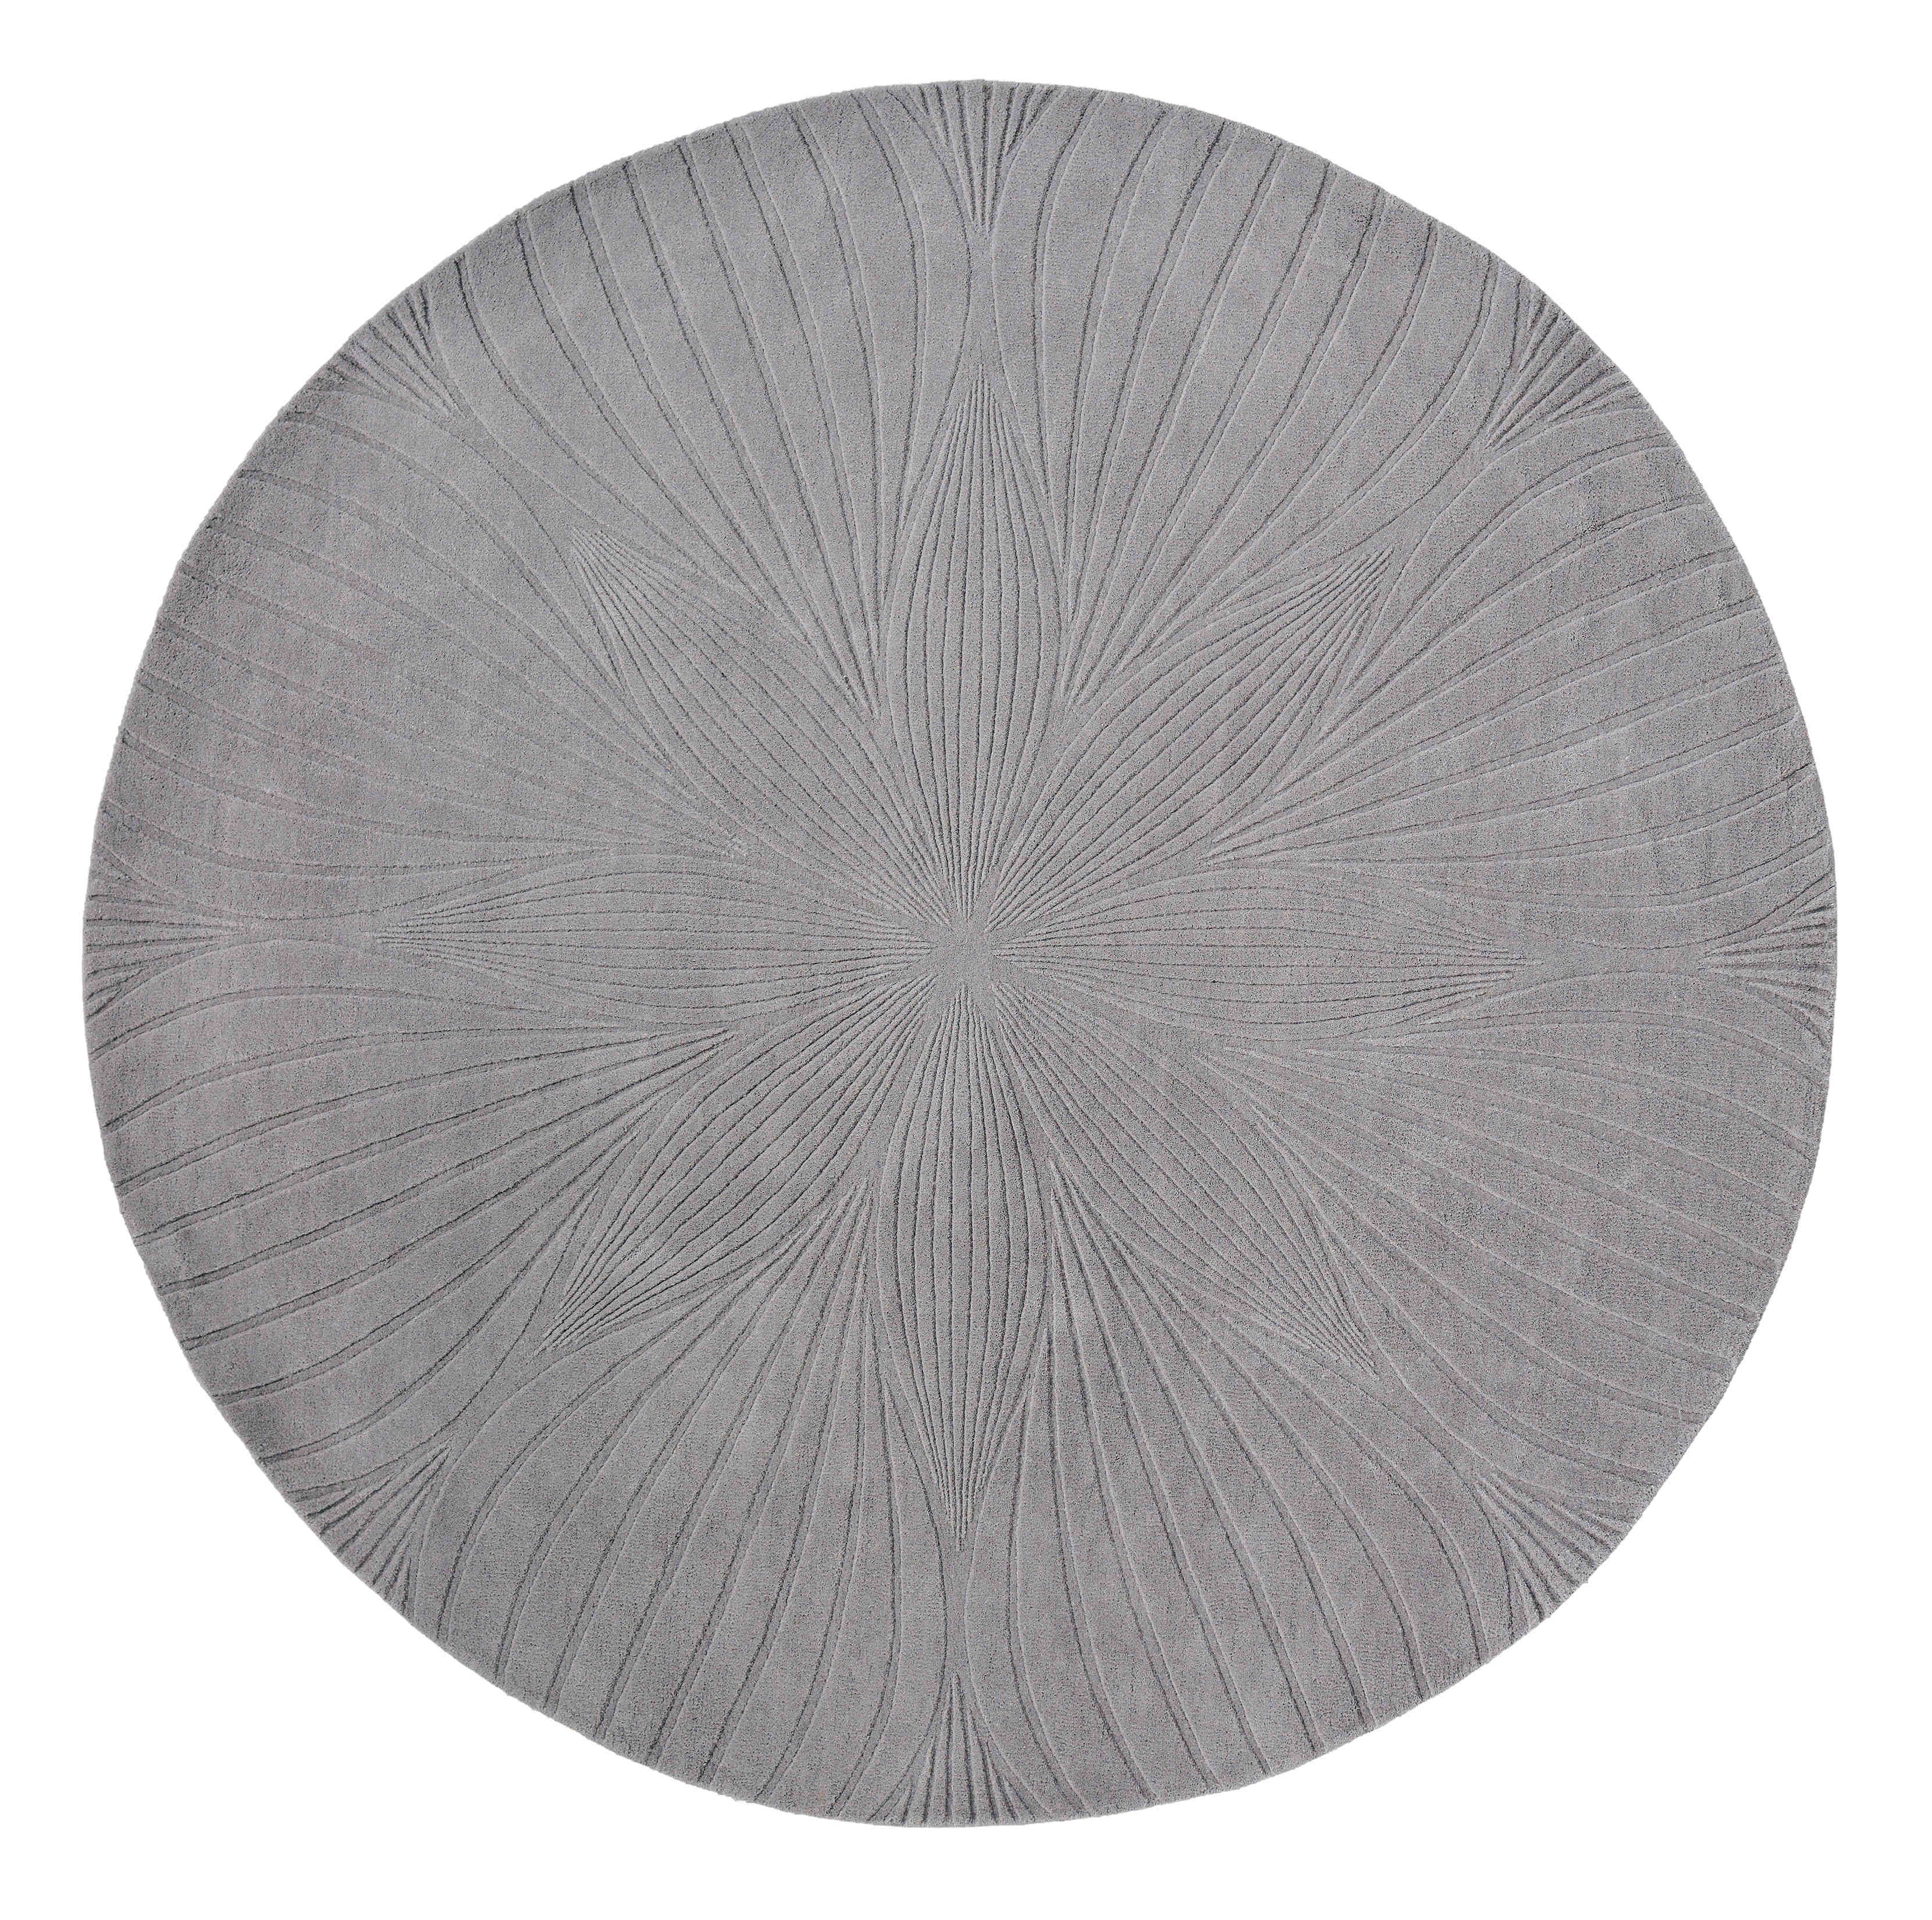 Round grey rug with engraved botanical pattern